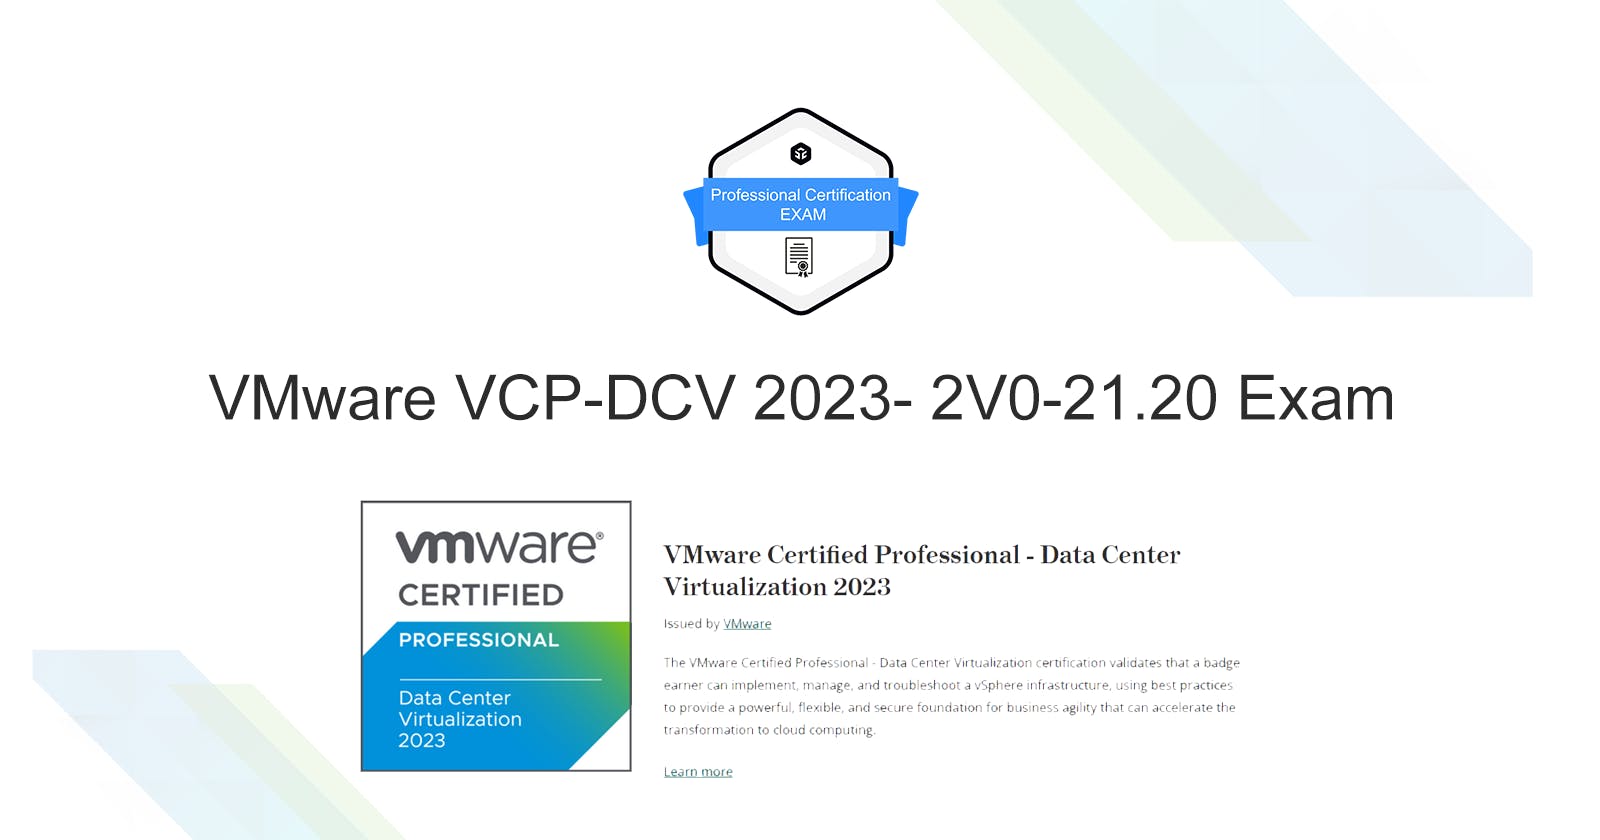 VMware VCP-DCV 2023- 2V0-21.20 Exam